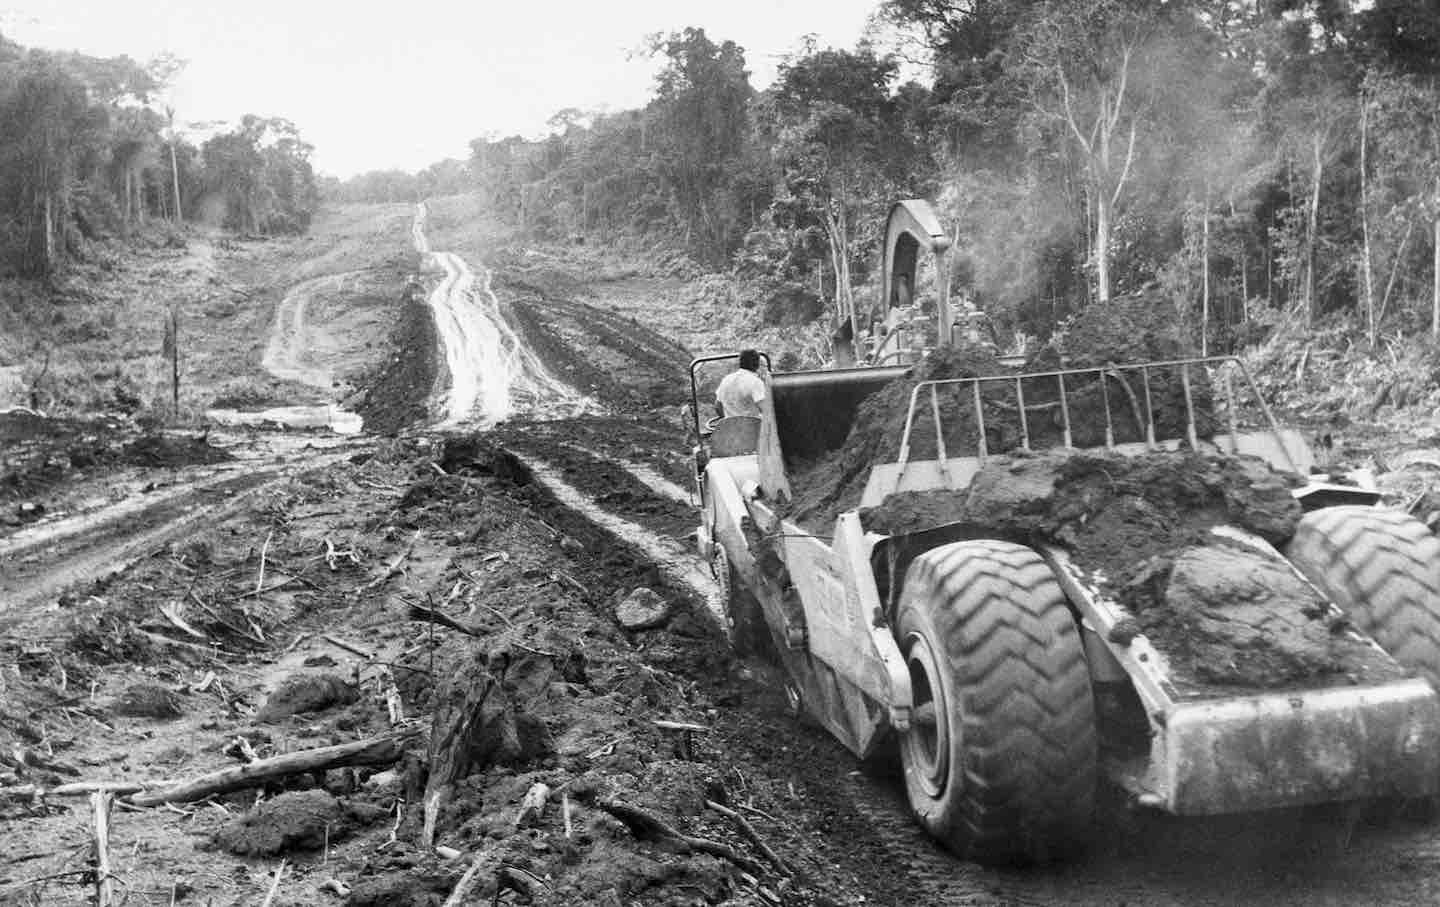 Trans Amazon highway construction near Altamira Brazil, 1971.